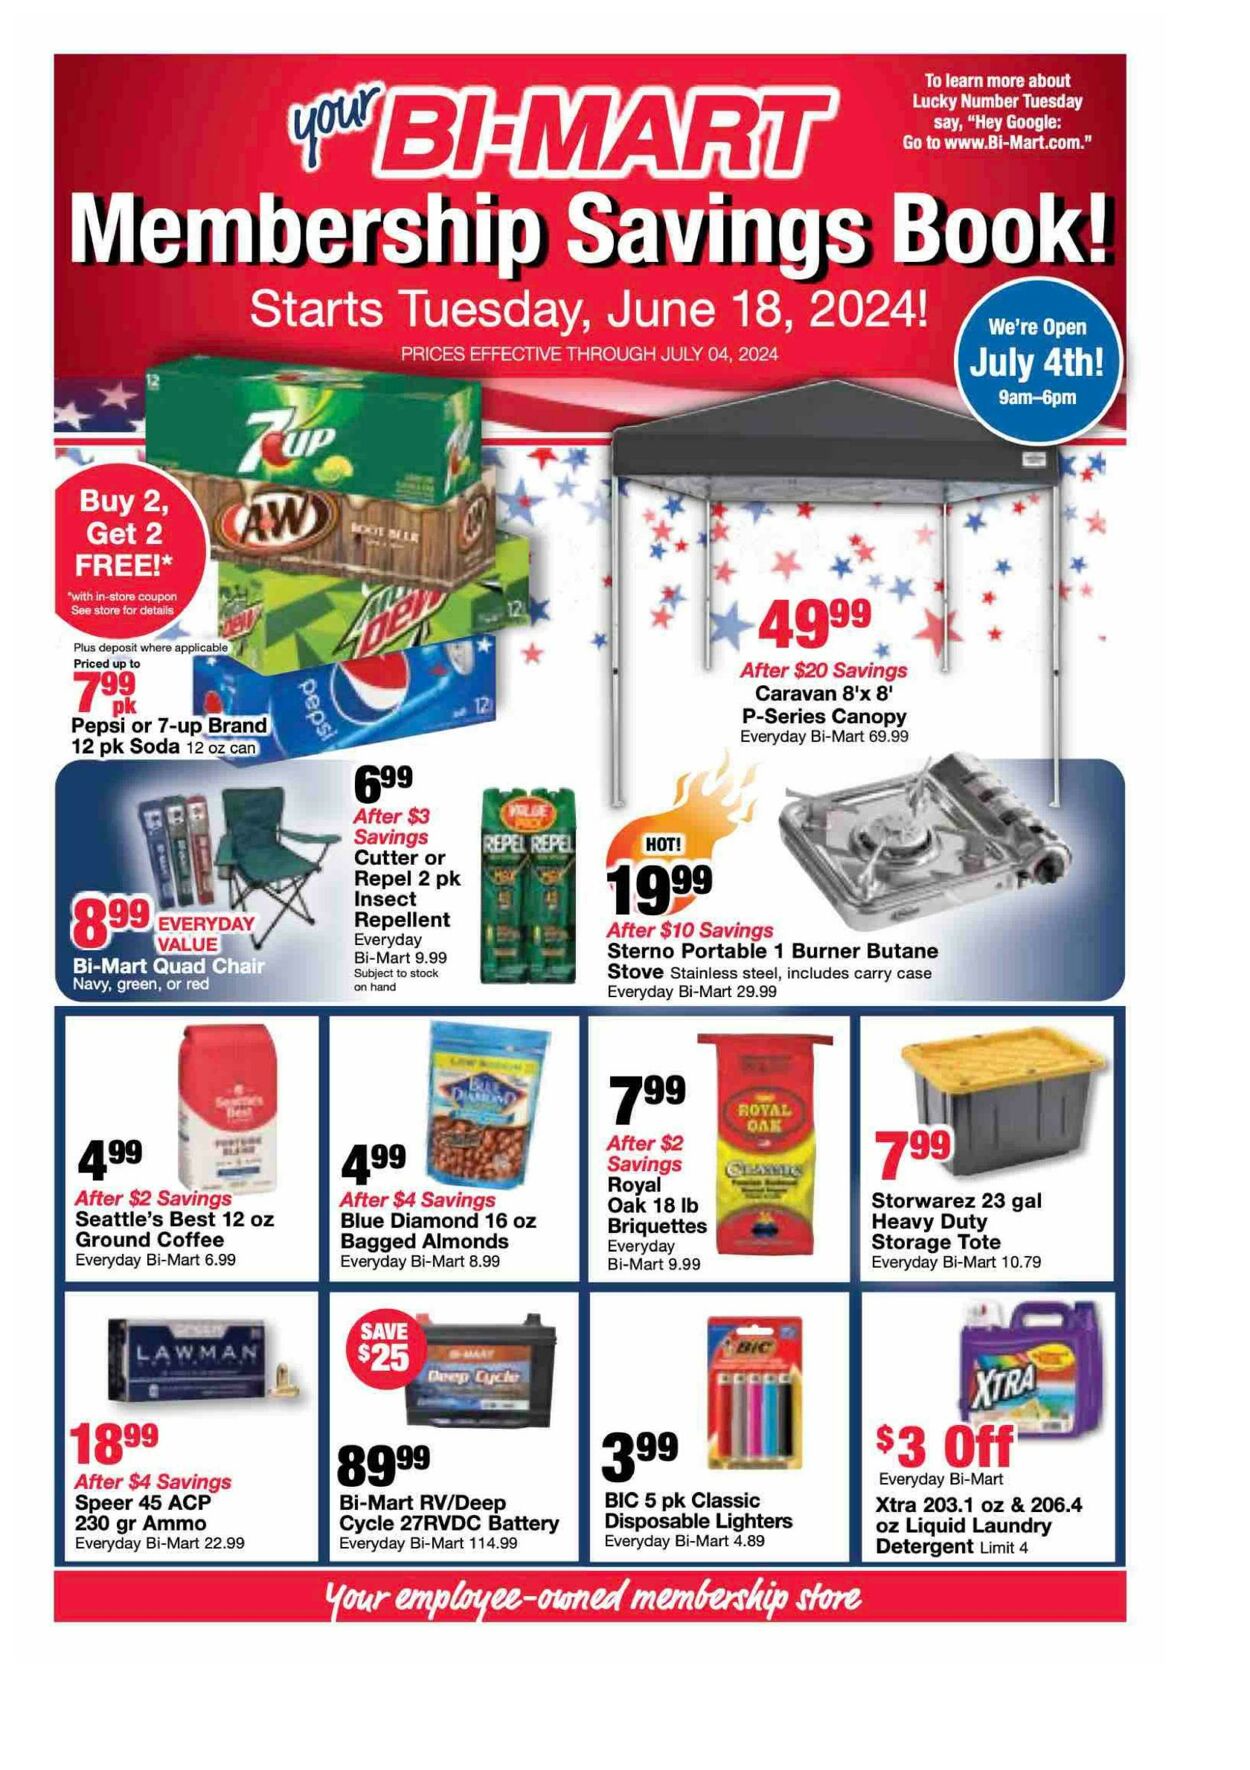 Bi-Mart Promotional weekly ads